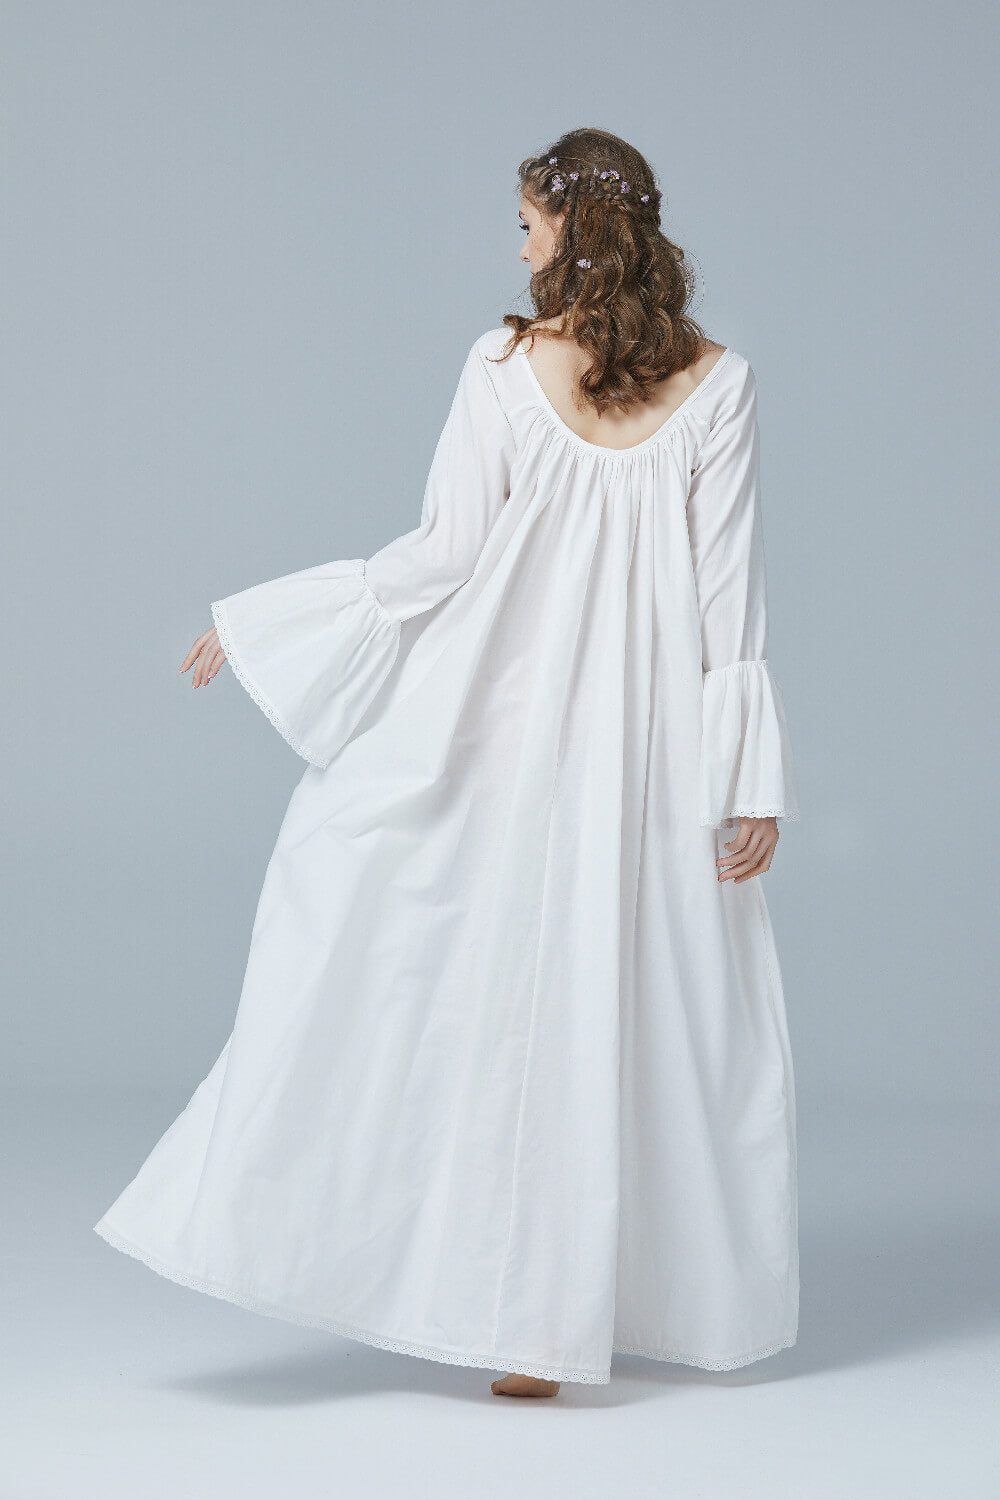 Victorian Nightgown 100% Cotton for Women Vintage Costumes Slip Sleepw ...